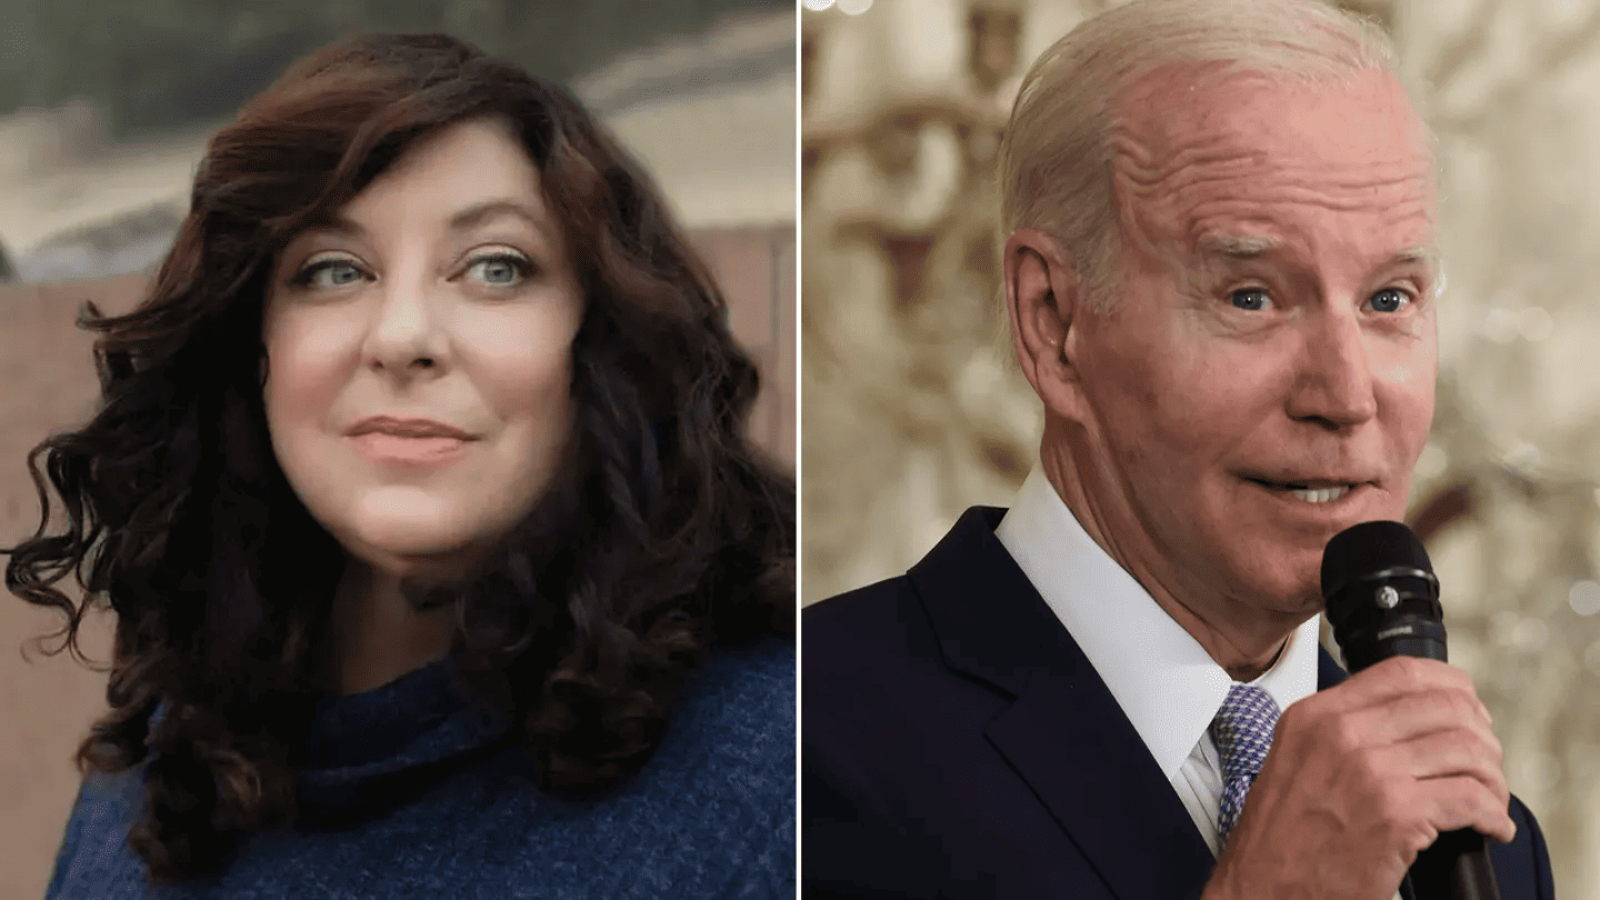 Headshots of Tara Reade and President Joe Biden